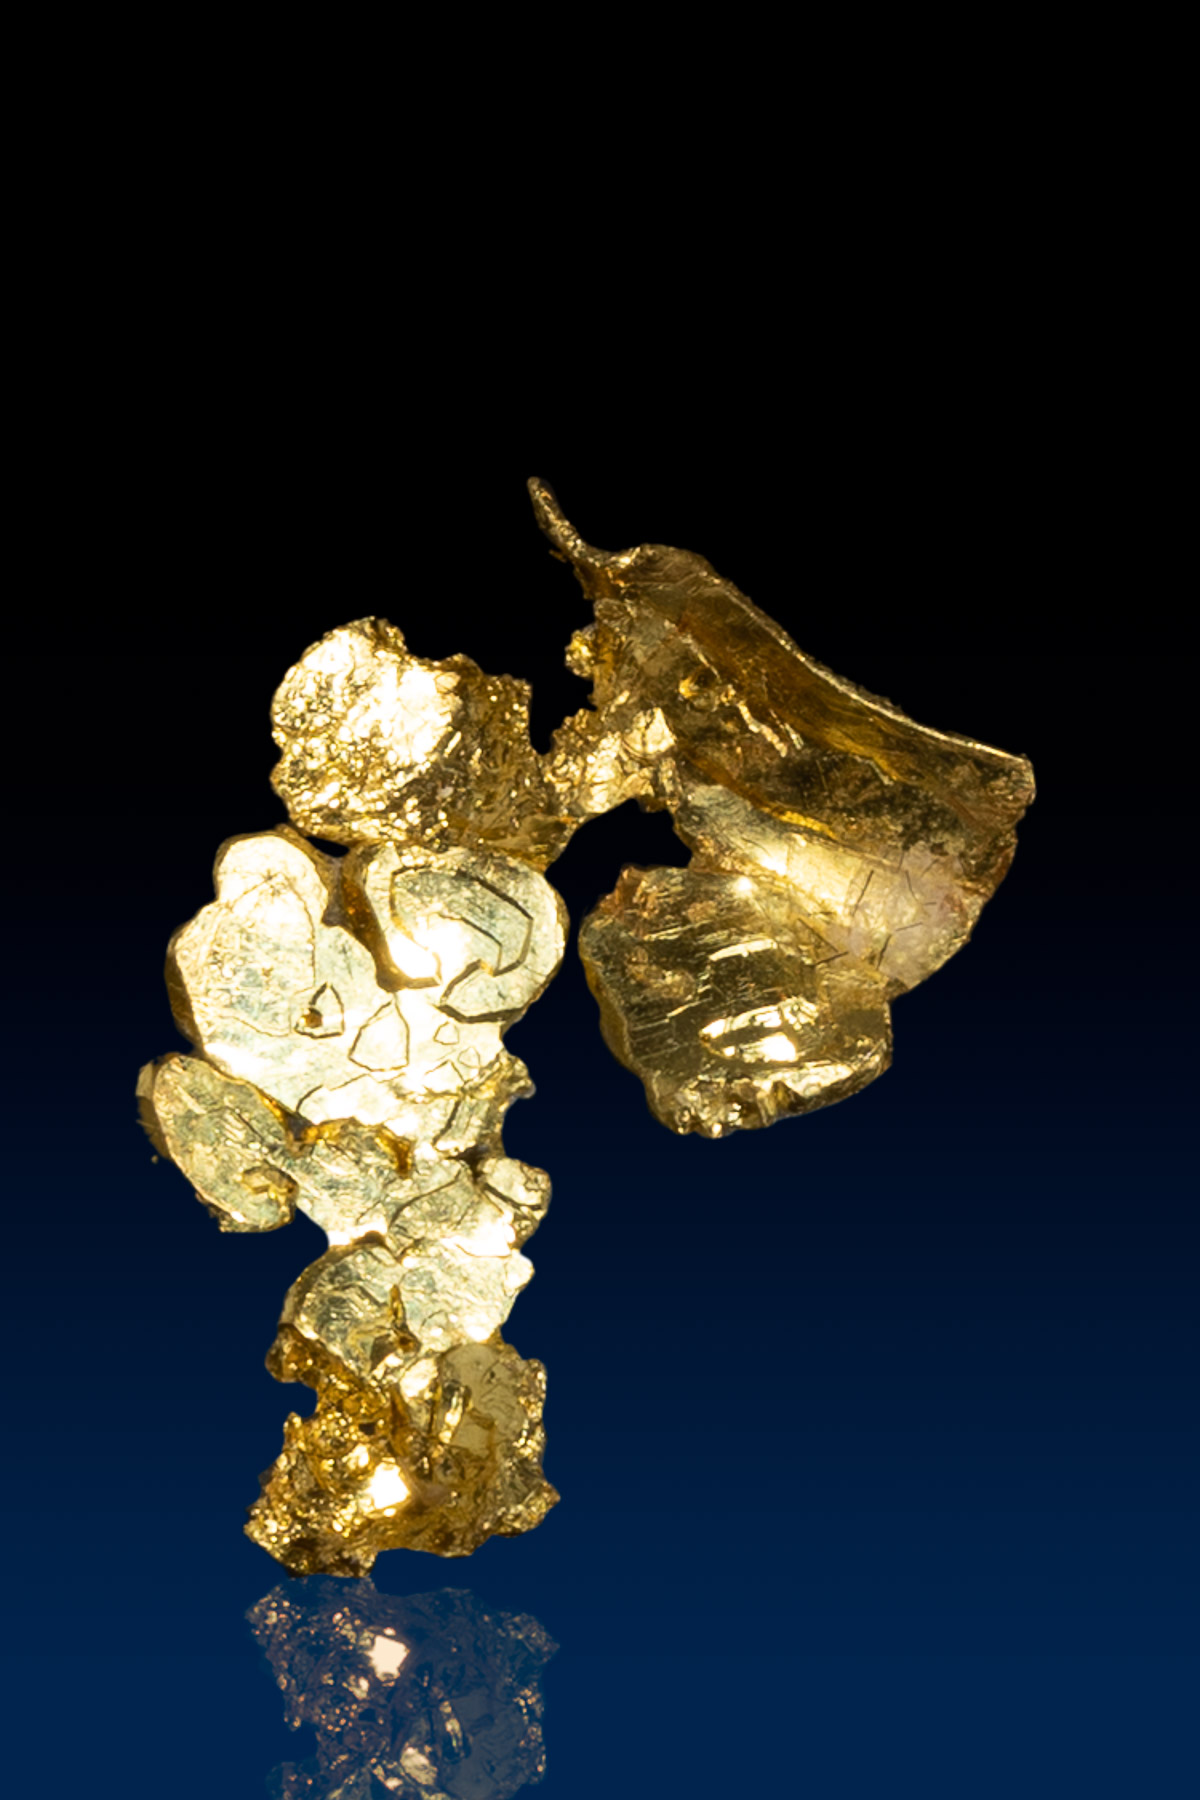 Brilliant Natural Gold Crystal -Famous Colorado Quartz Gold Mine